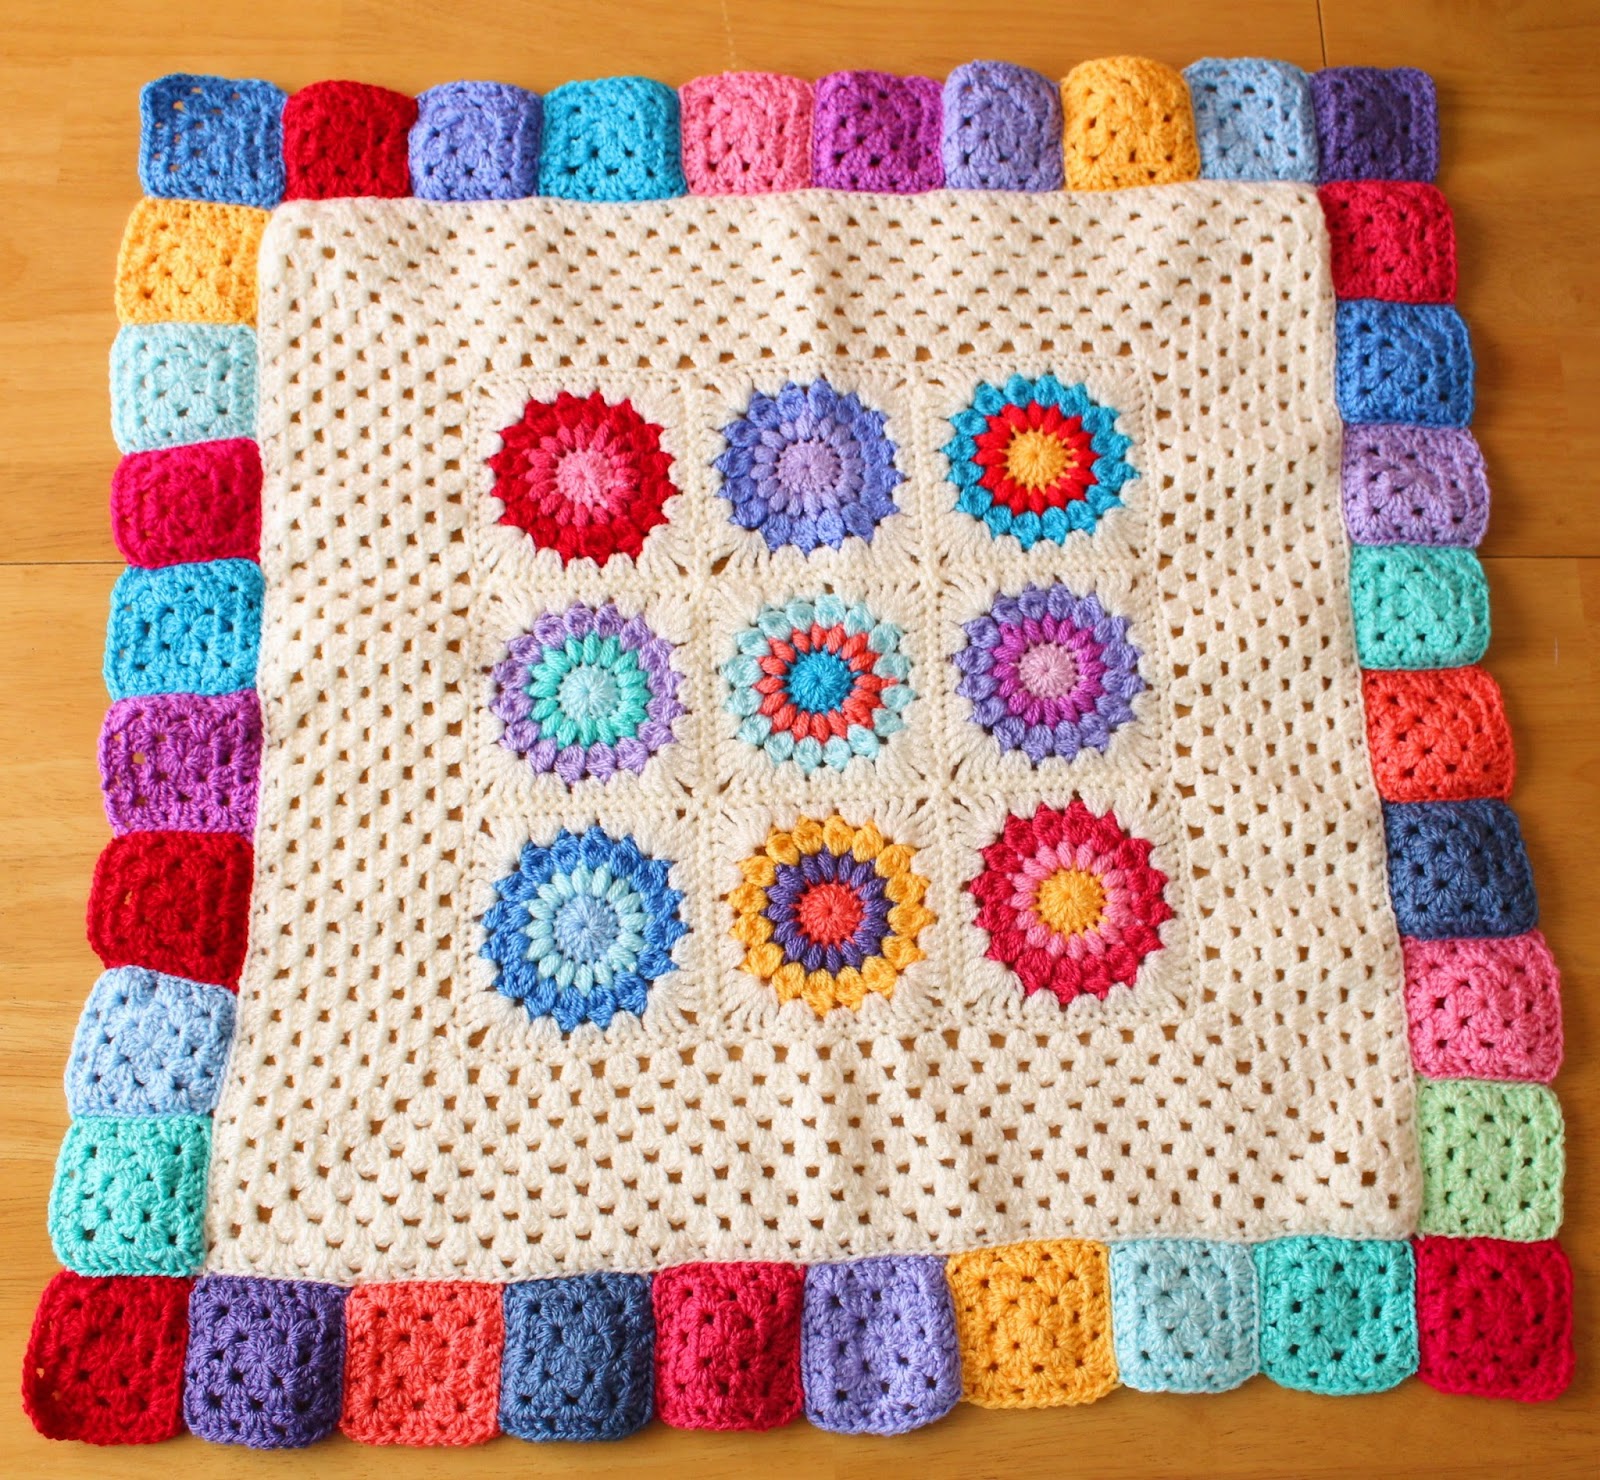 Da's Crochet Connection: Granny Squares and Stripes #3